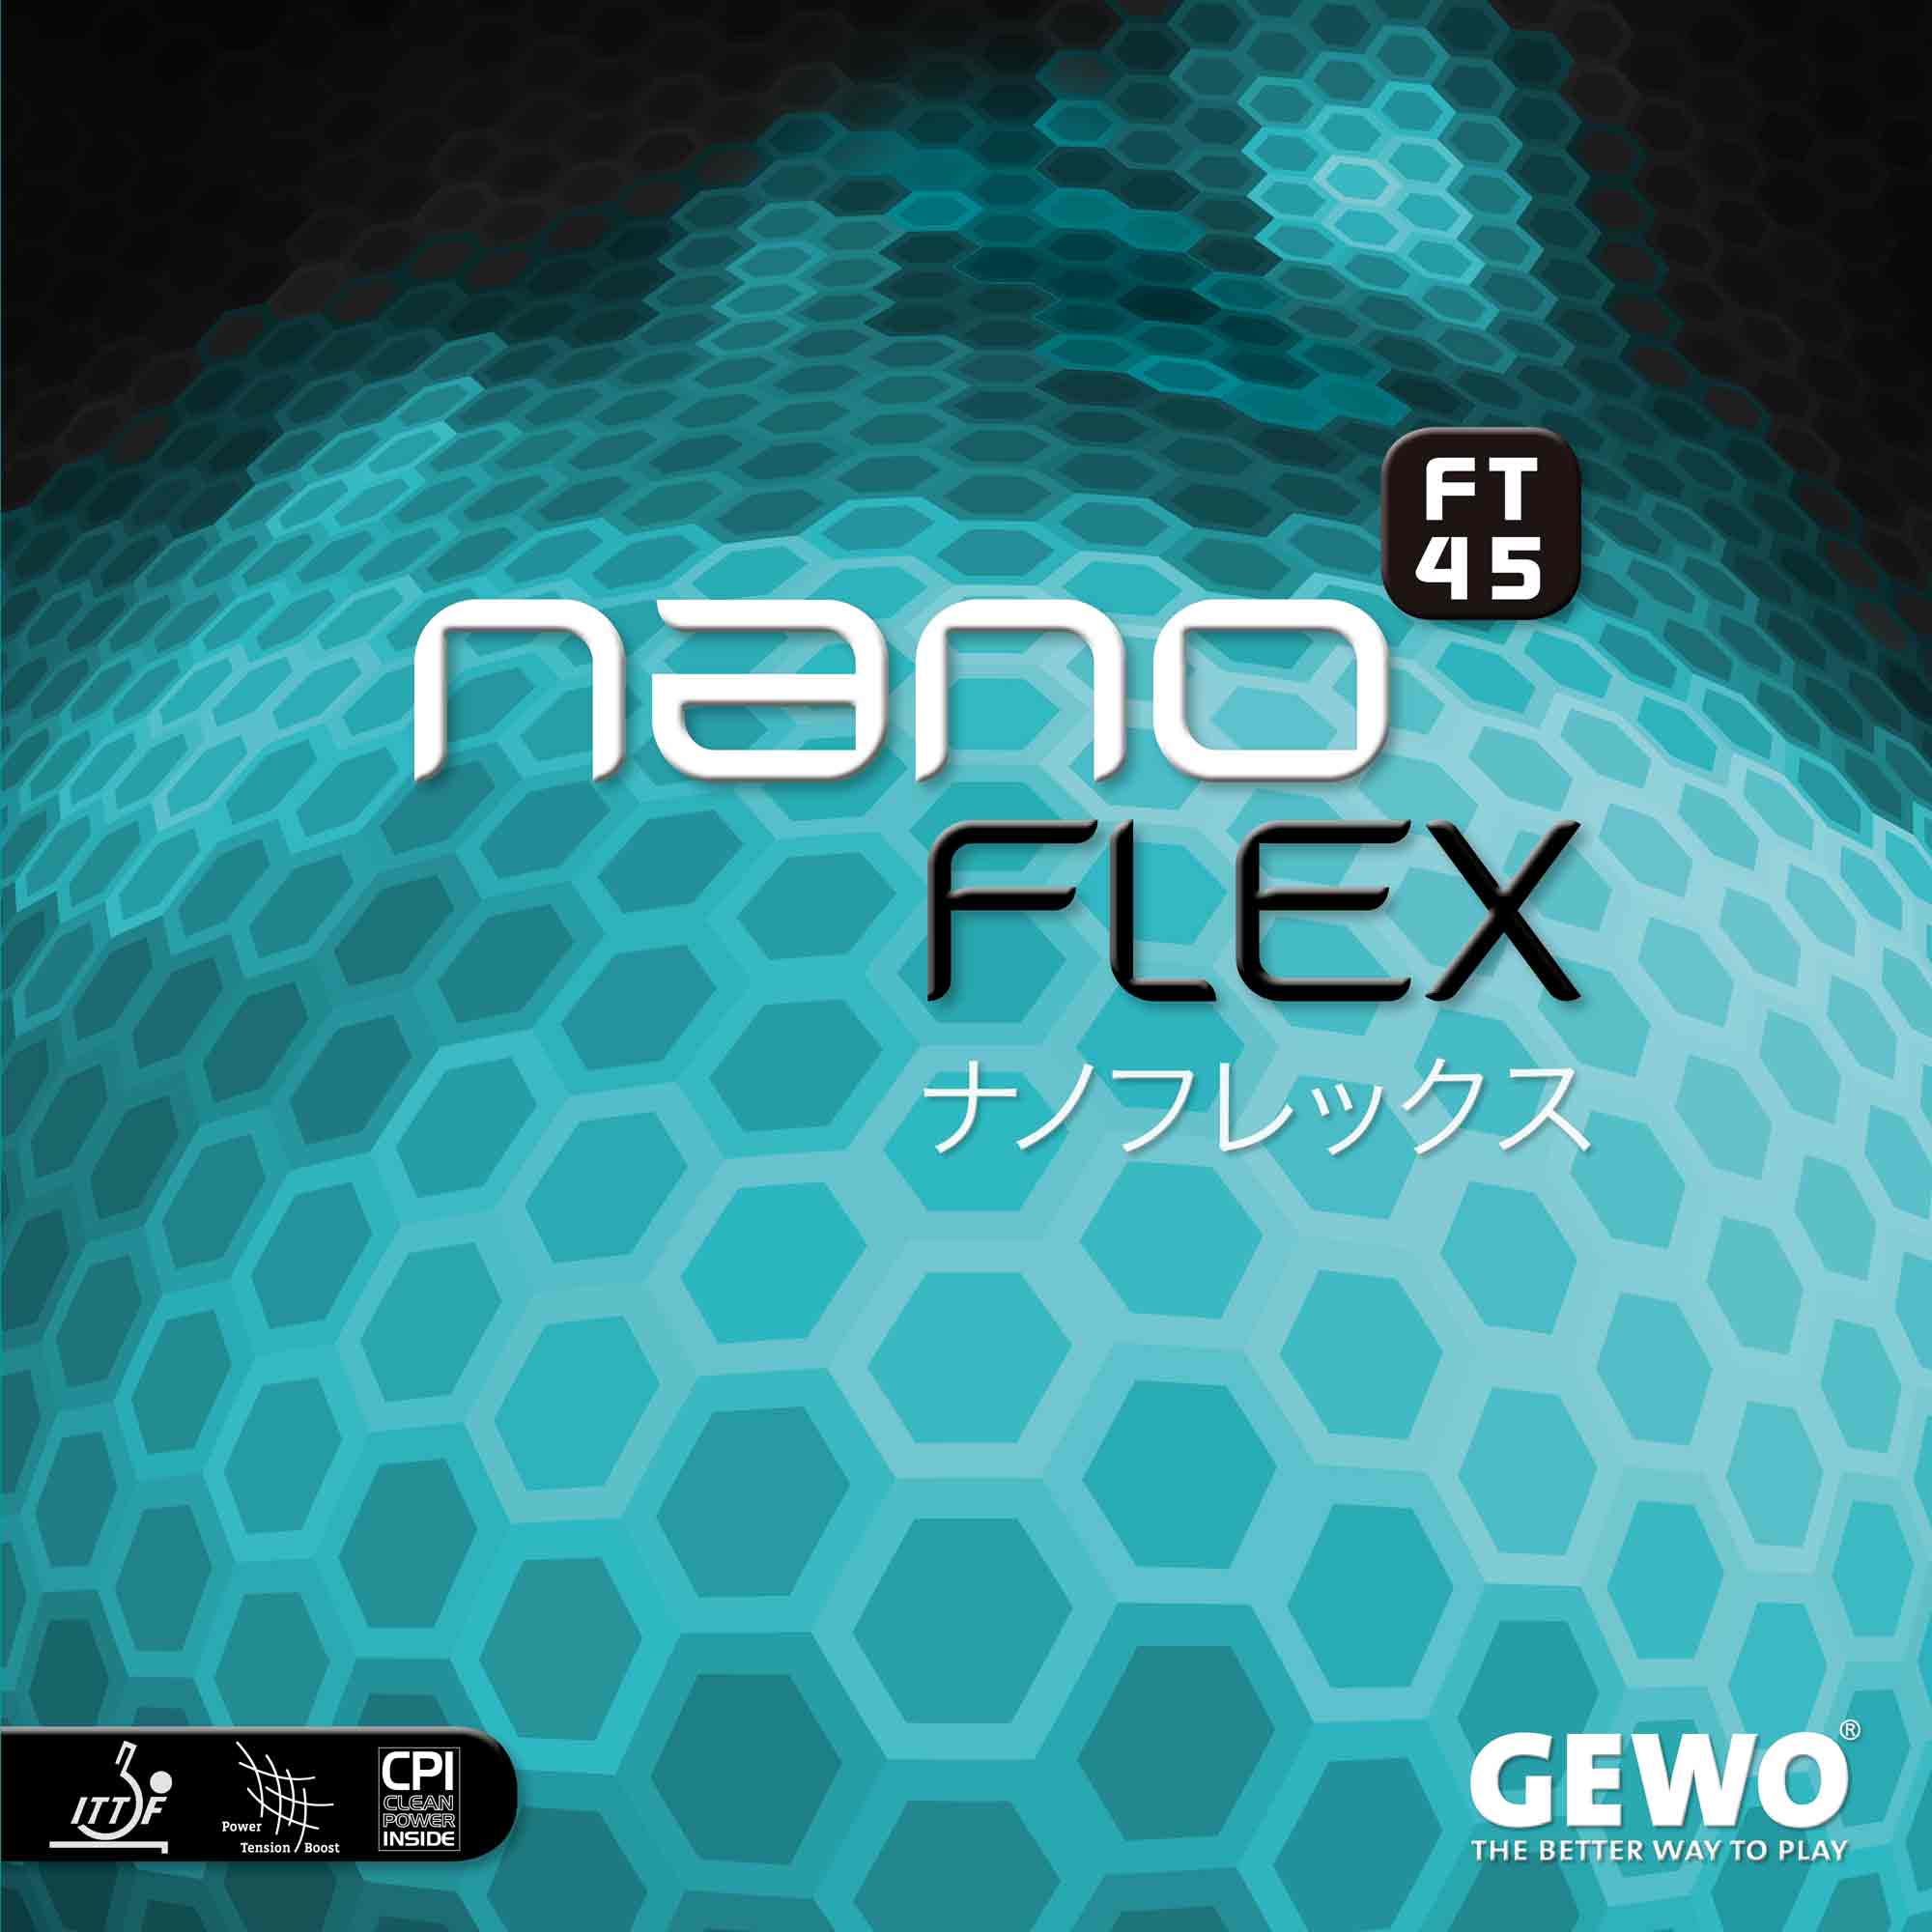 Gewo Rubber nanoFLEX FT45